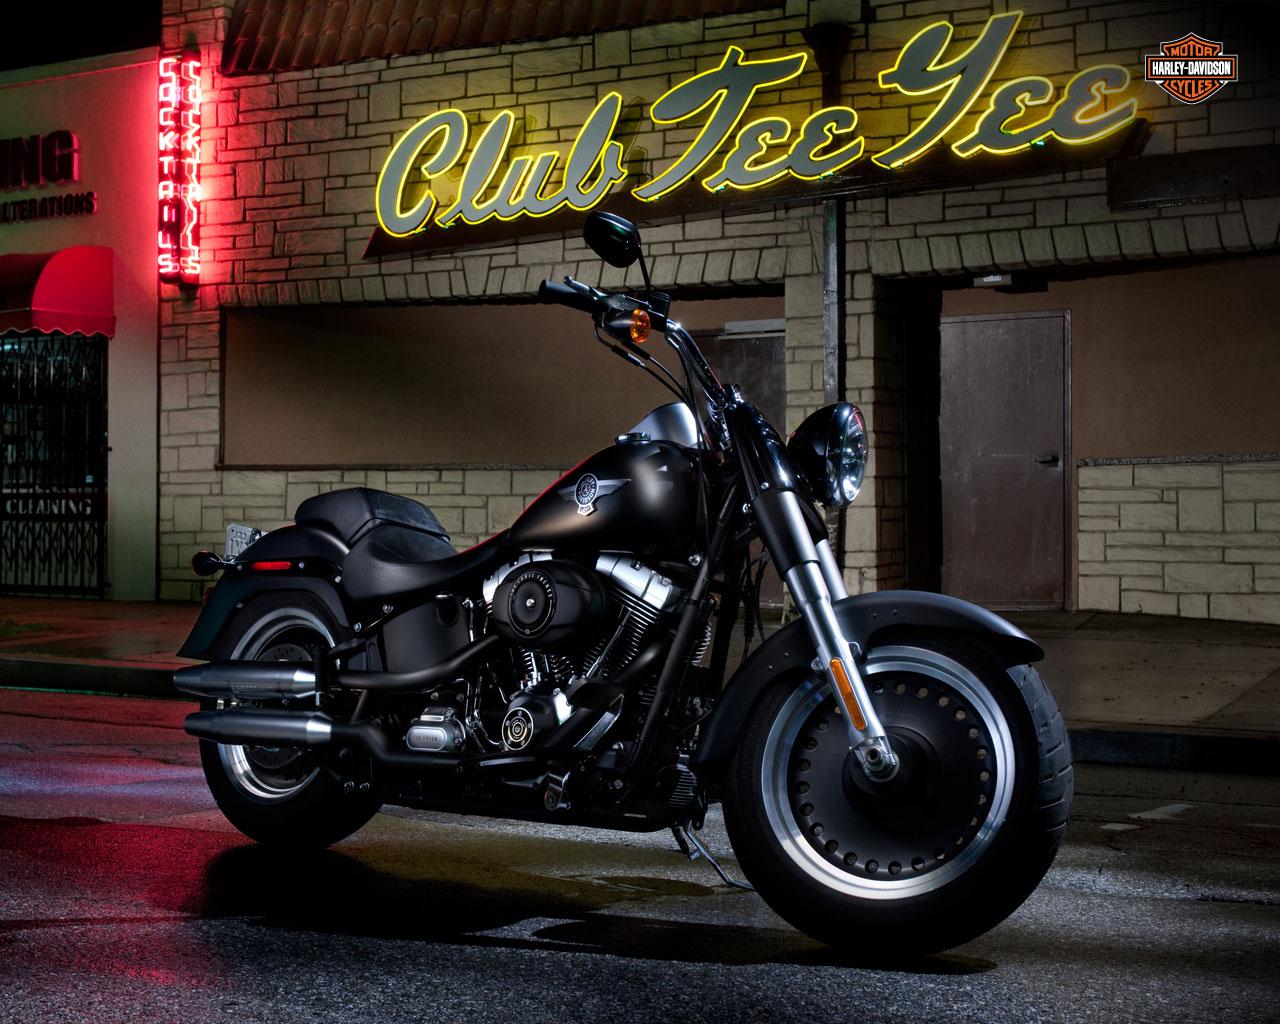 Harley Davidson Fat Boy Wallpaper And Background Image